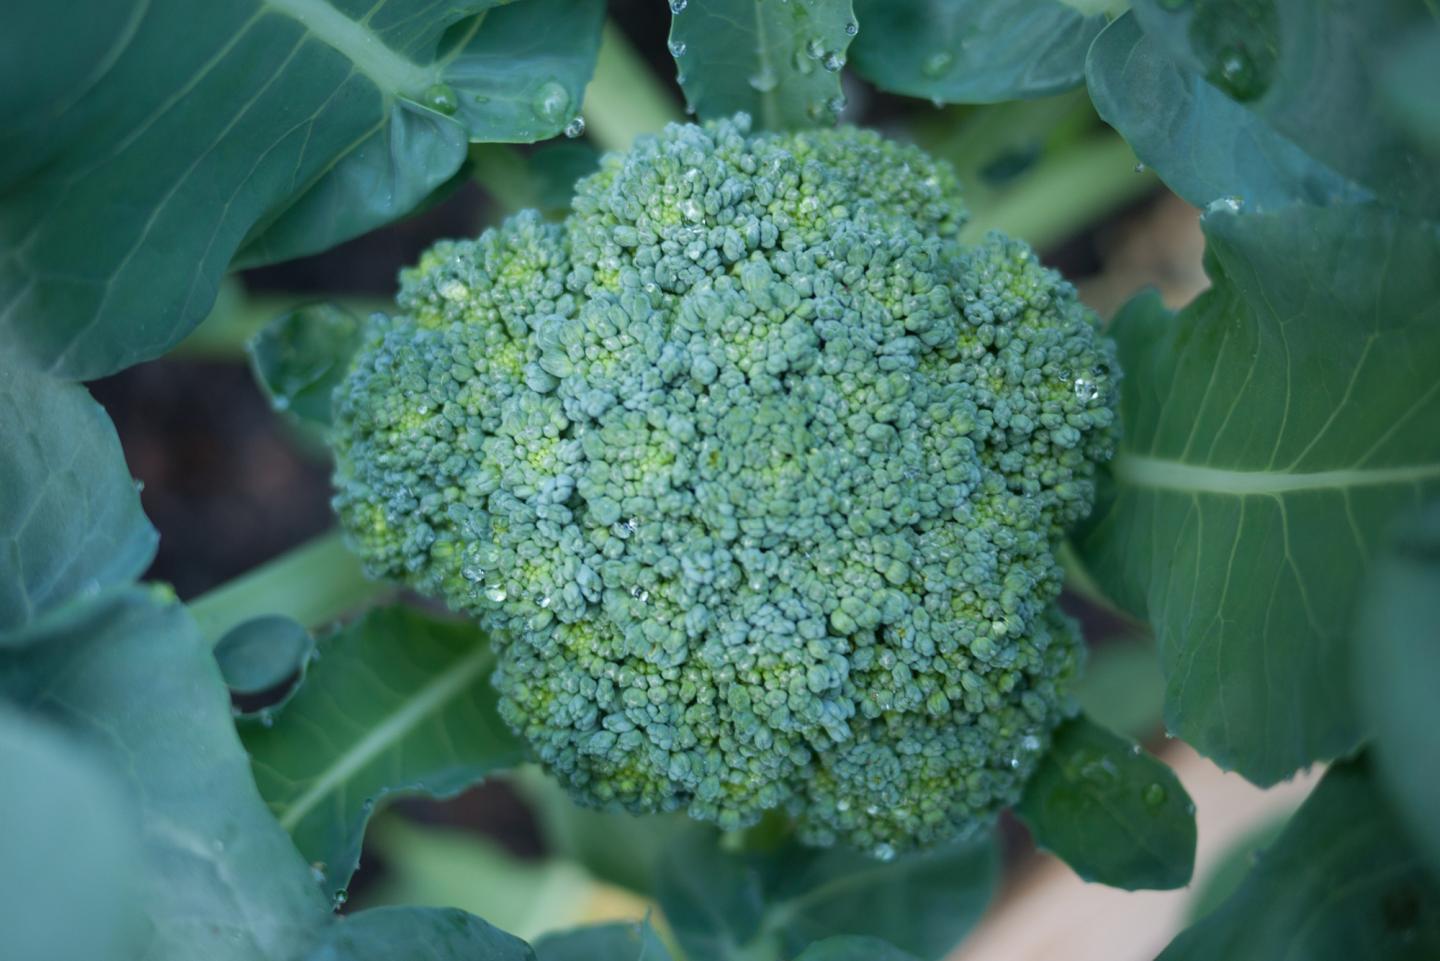 Ammonium and Broccoli